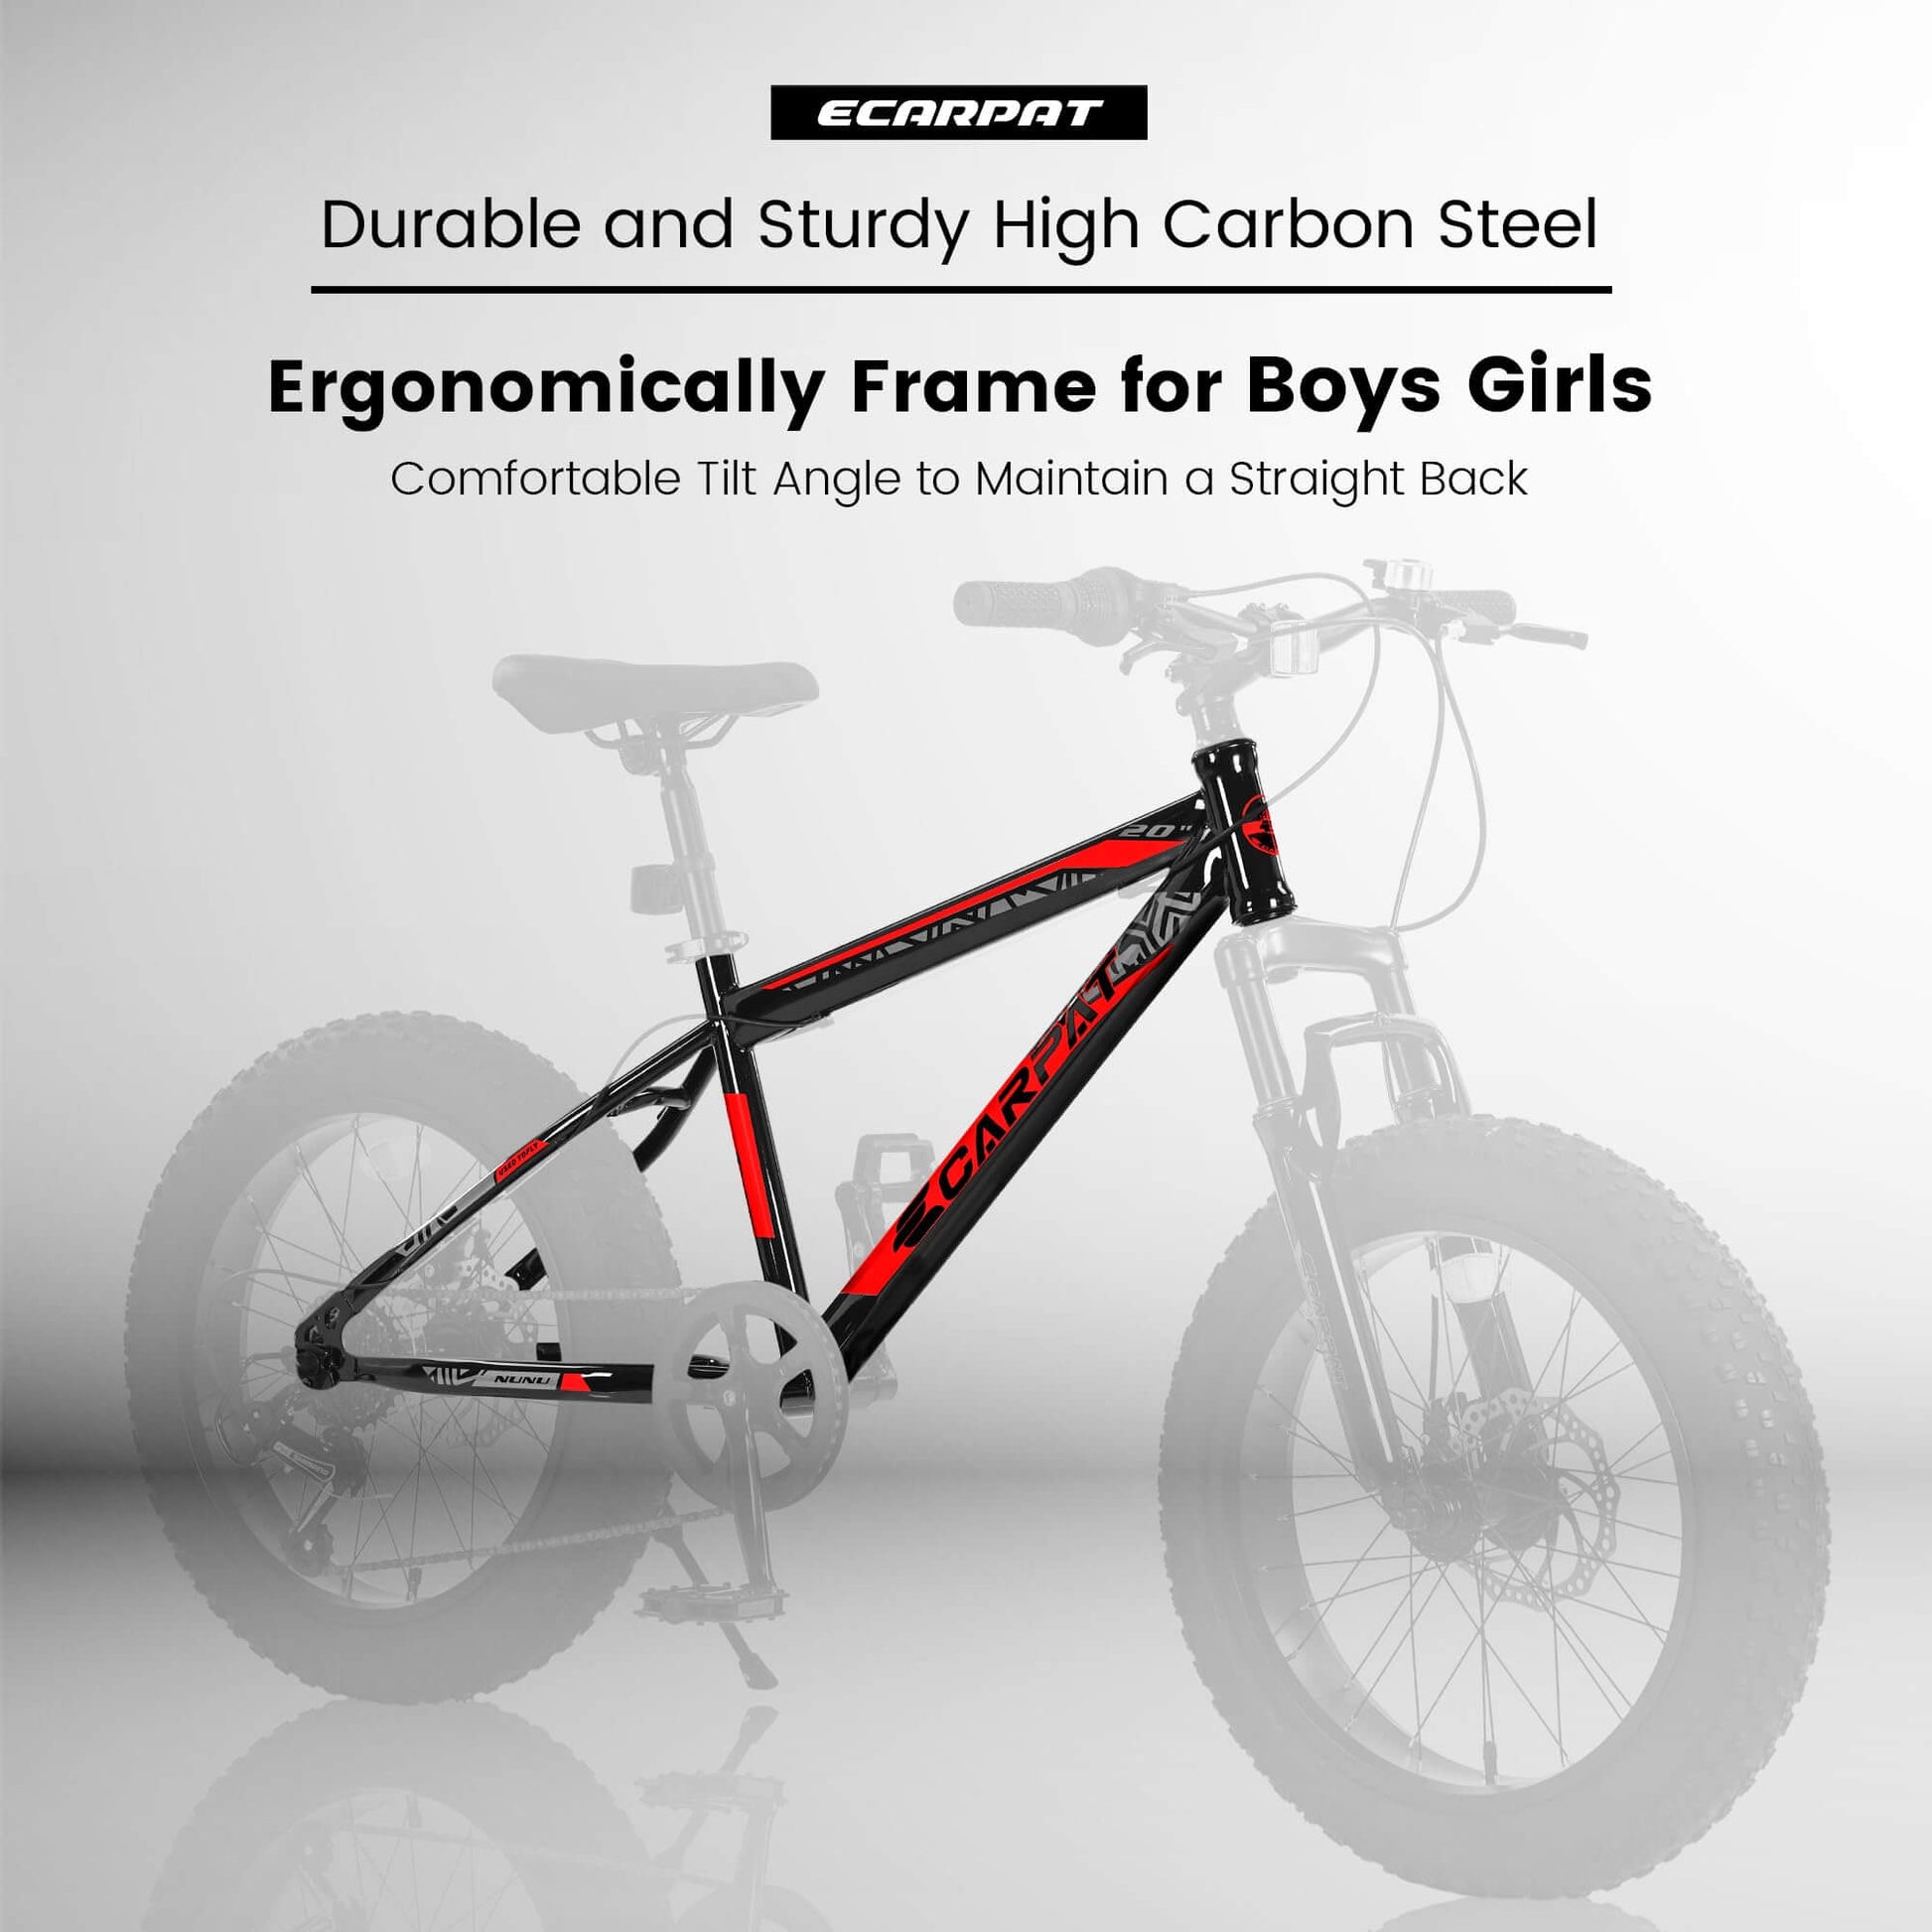 Ecarpat Joycycle 20"×4.0" Youth Fat Bike